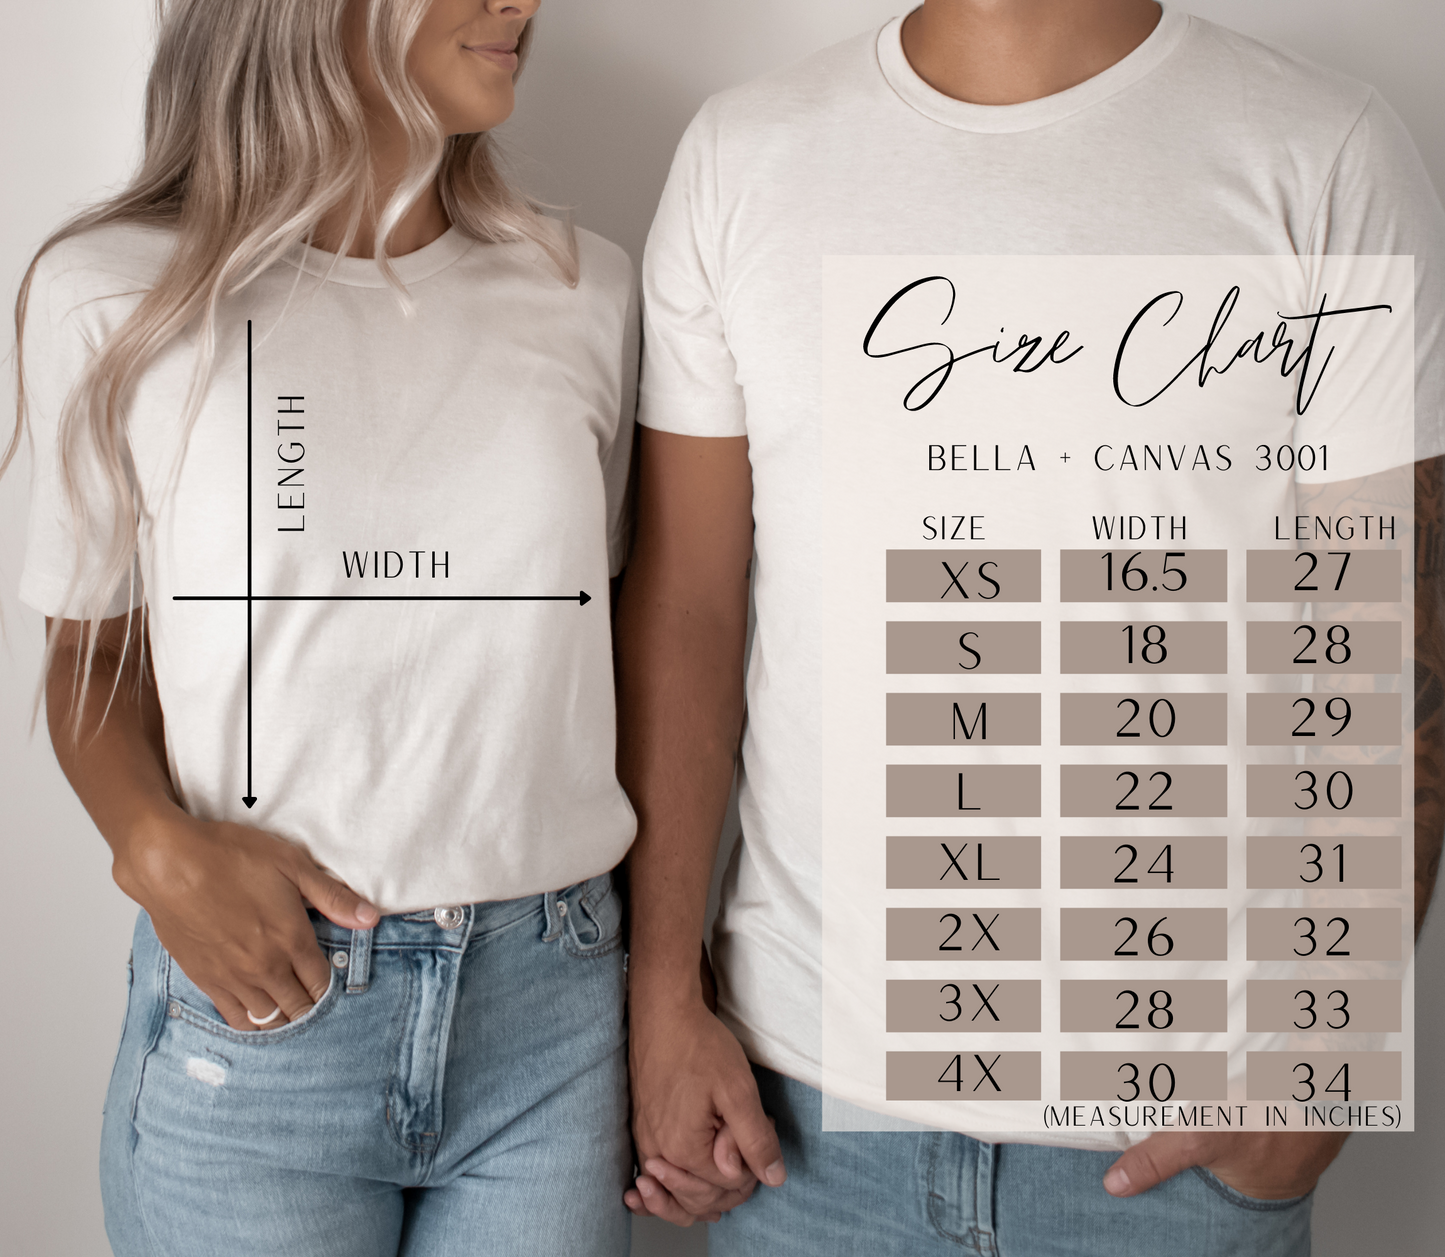 bella canvas 3001 unisex t-shirt size chart